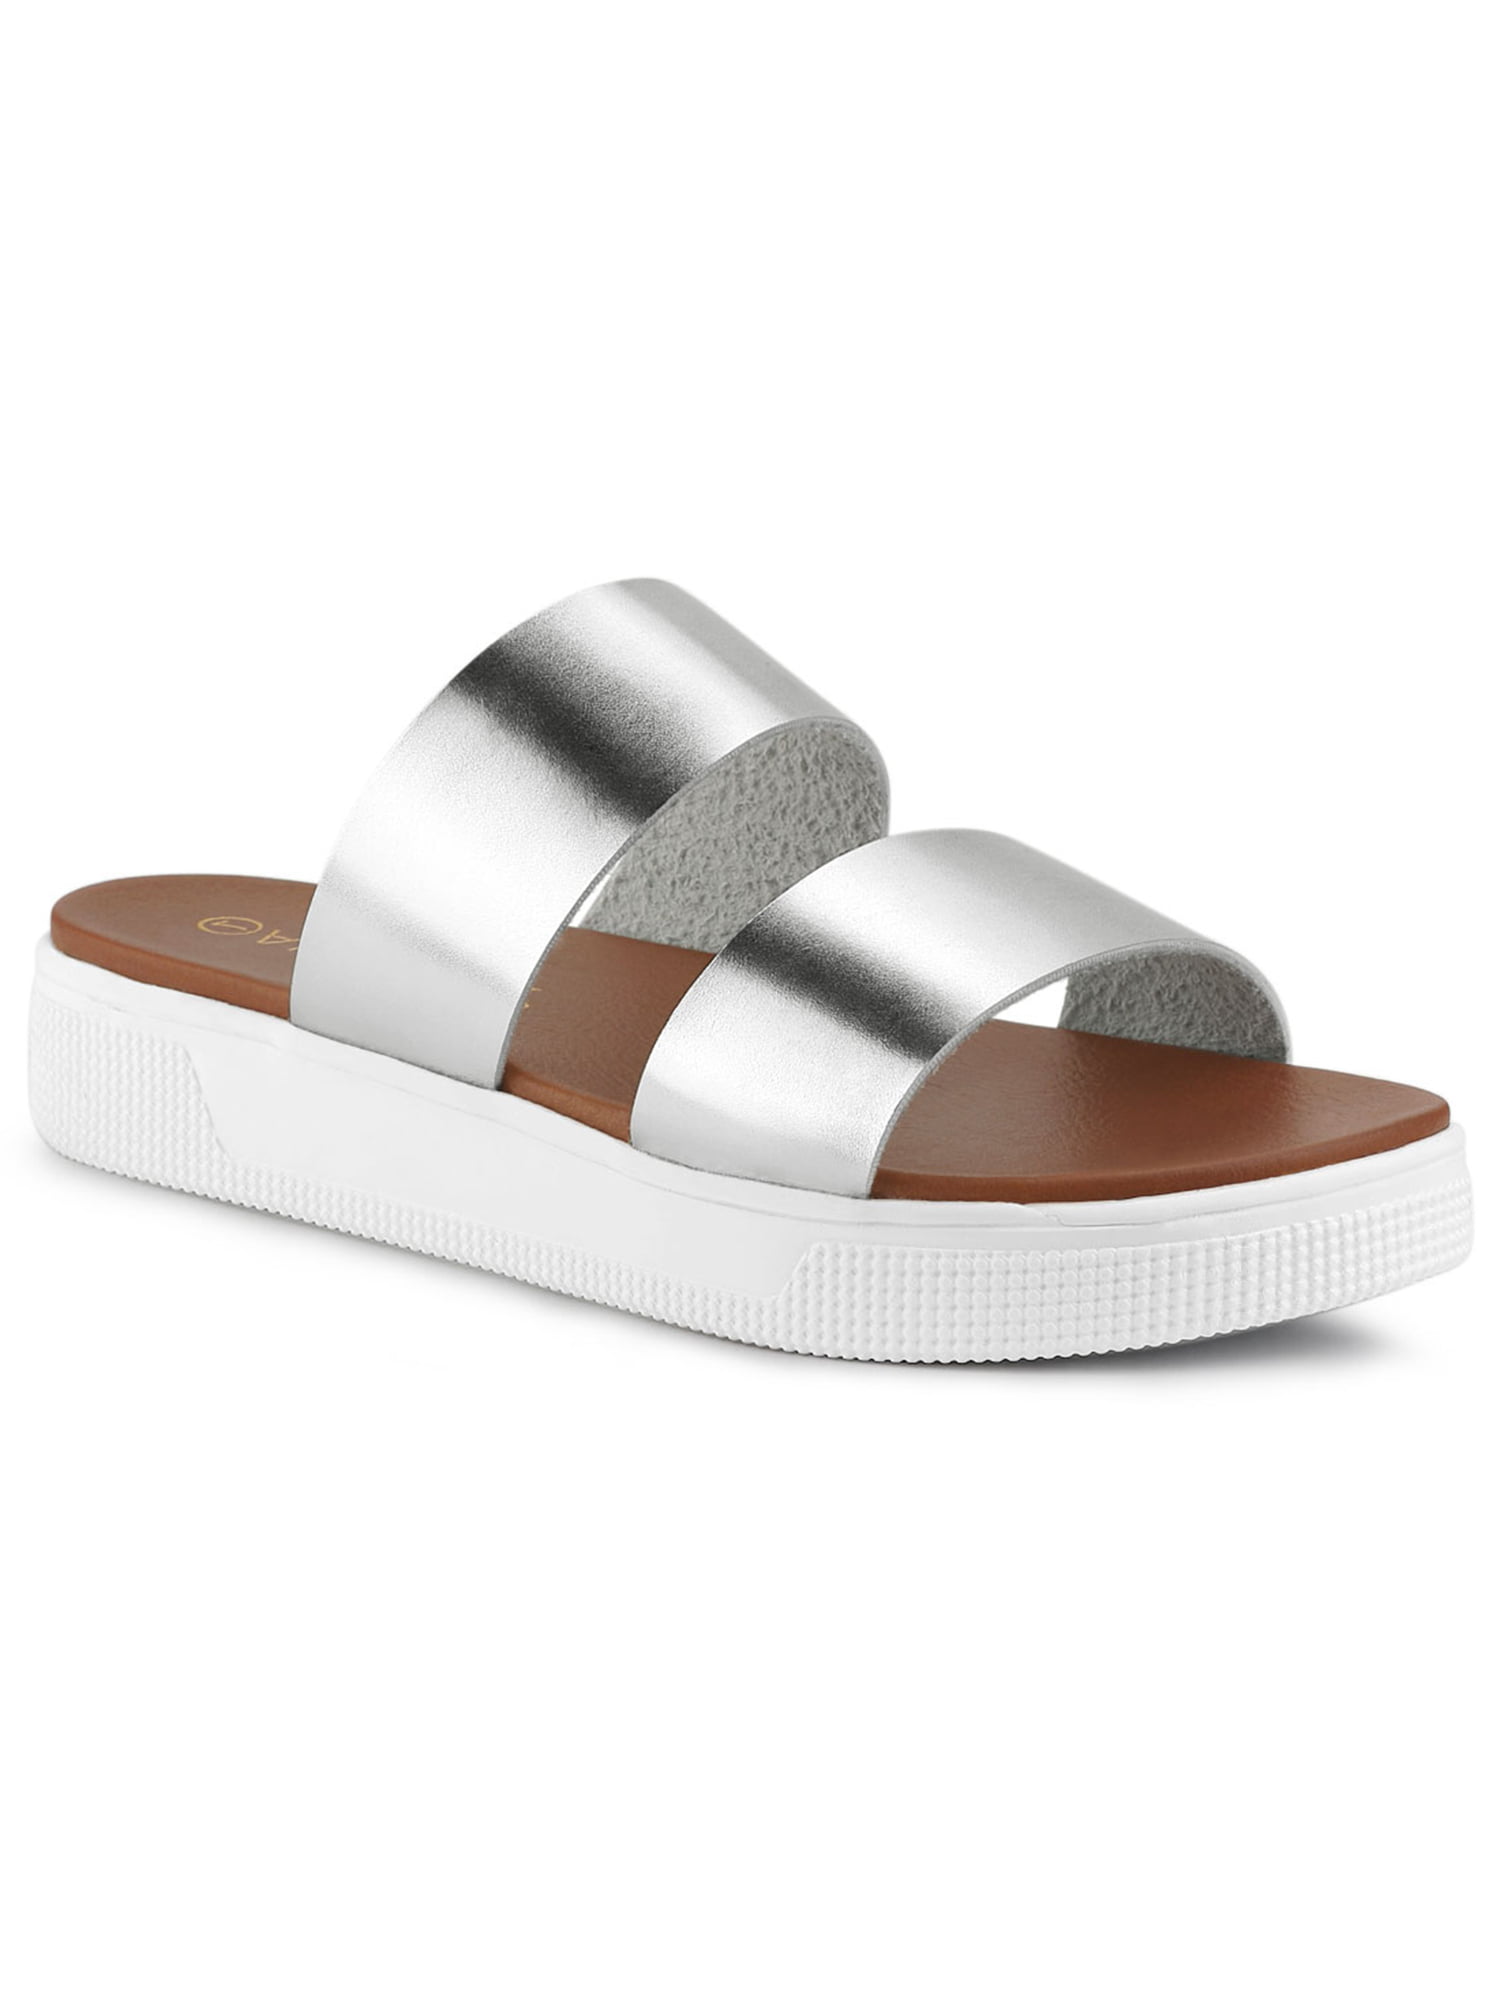 flatform sandals silver